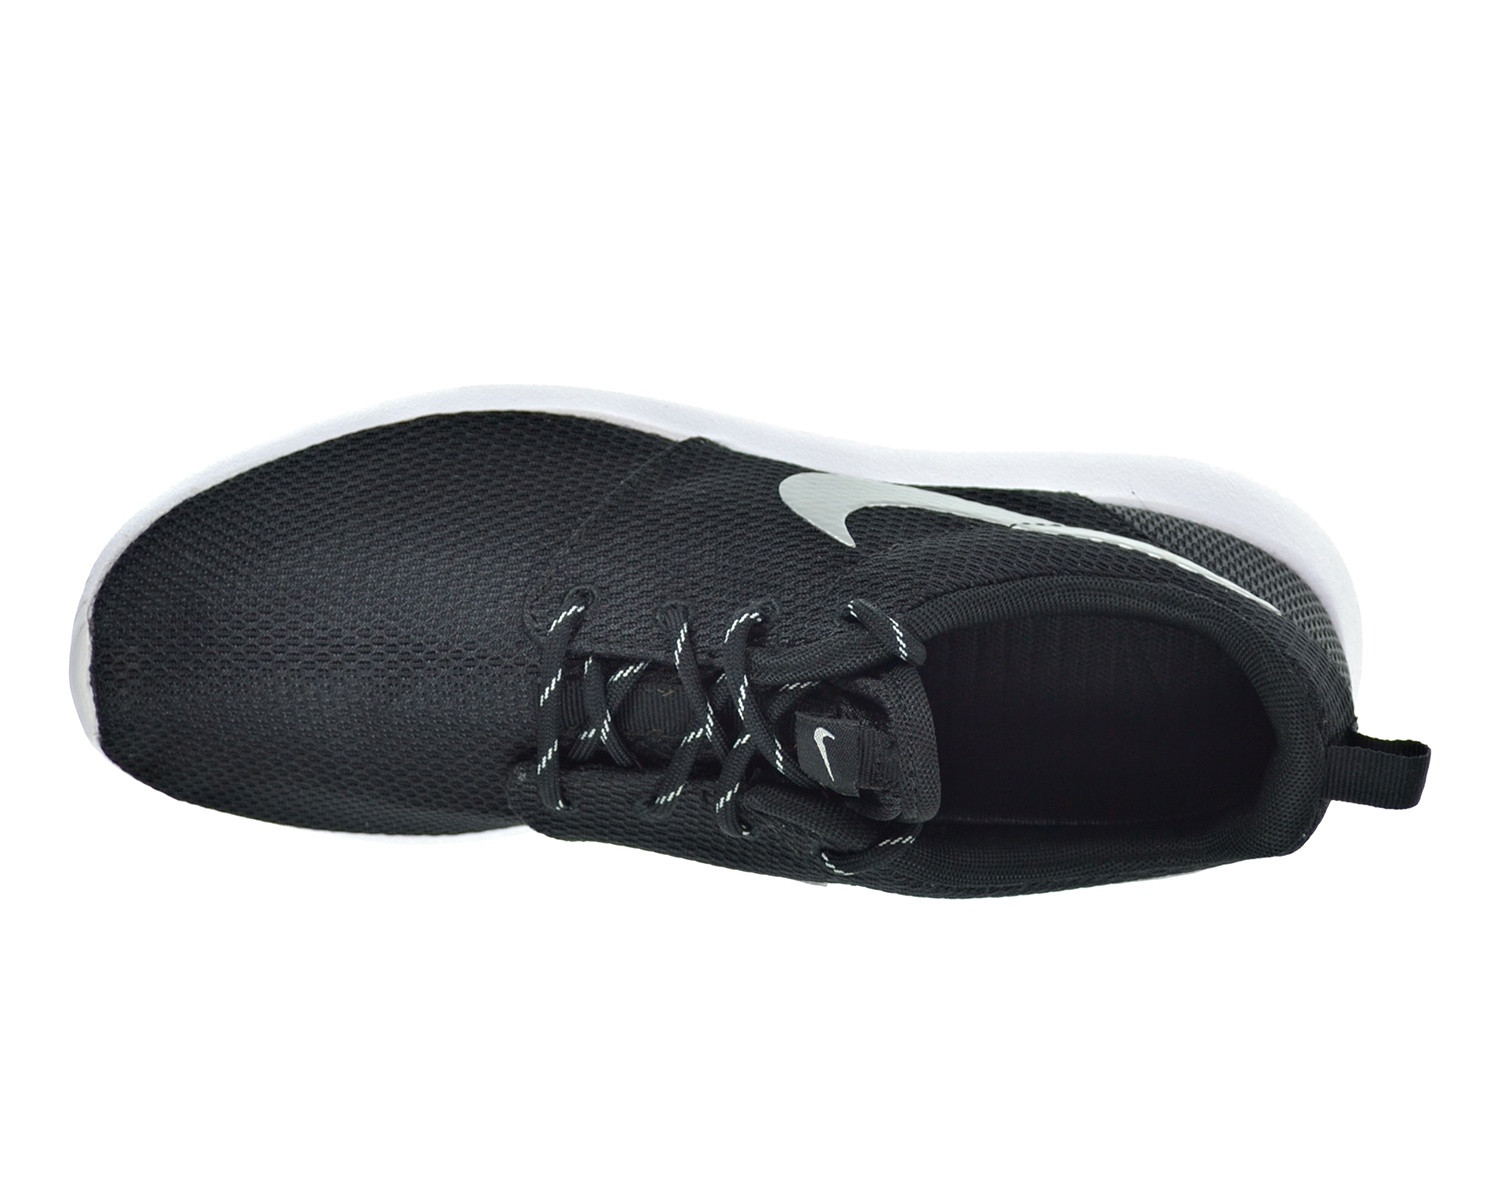 StclaircomoShops - Nike Run Black White Metallic Platinum Womens Vulcanized Shoes 511882 - Salomon Beige & Green Raid Wind Sneakers - 094